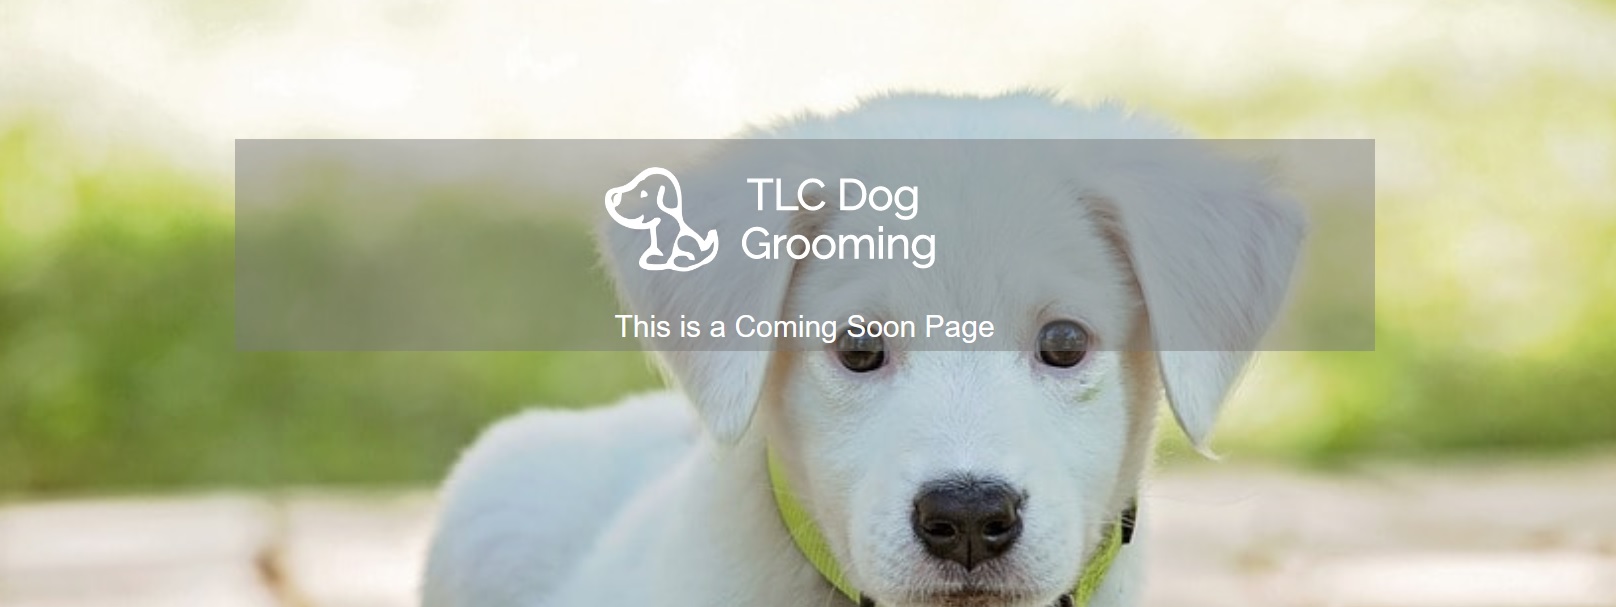 TLC Dog Grooming Coming Soon